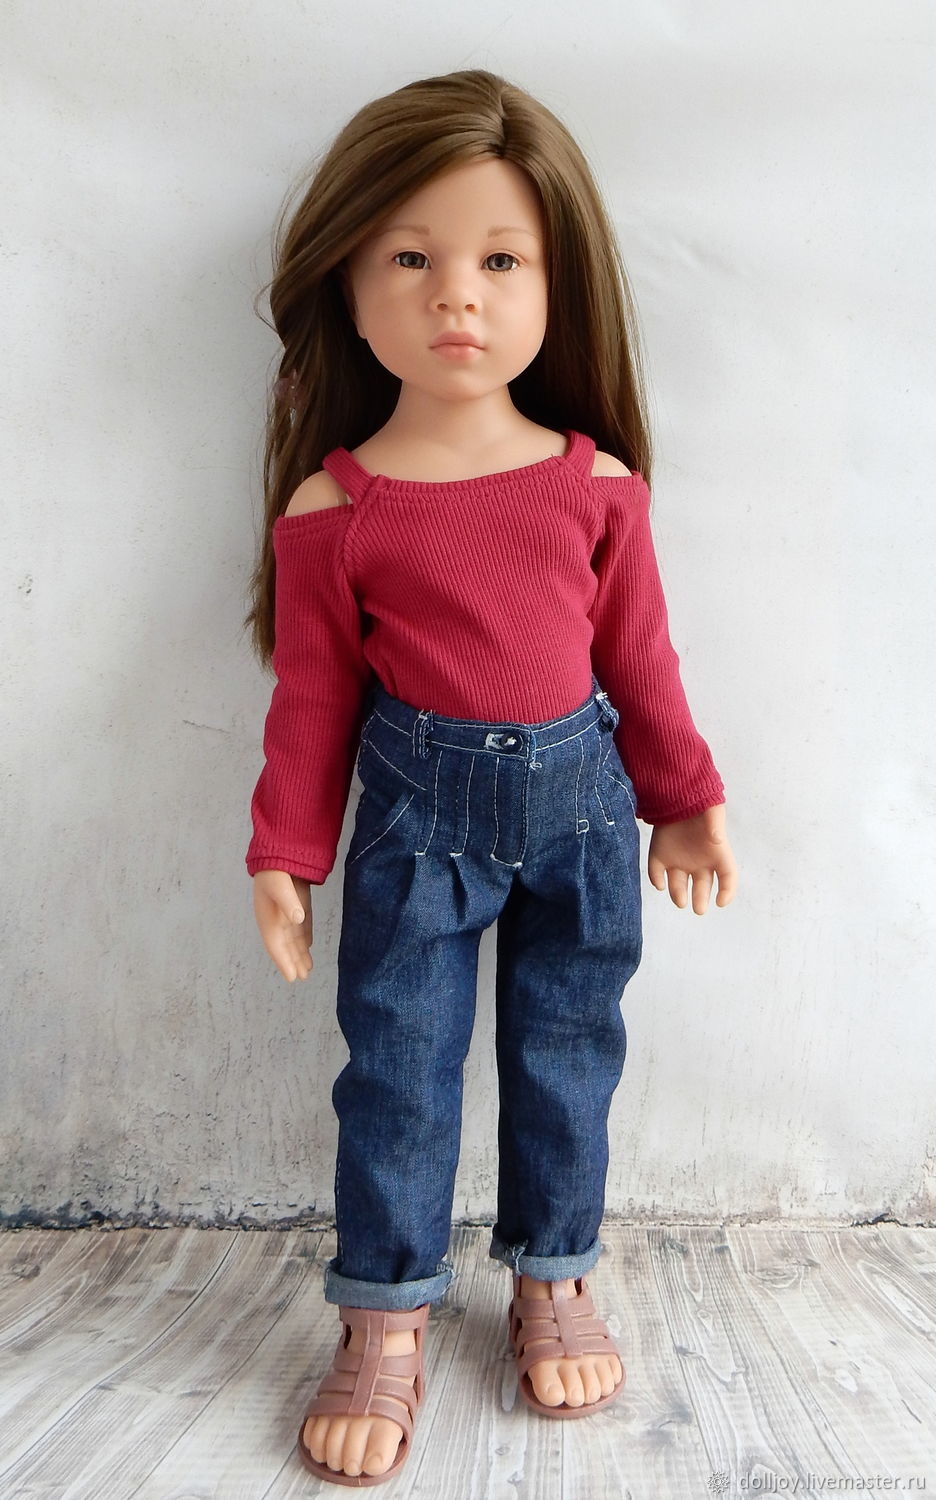 Кукла 50 купить. Куклы Готц 50 см. Кукла Готц 36 см. Кукла Готц 50 см шарнирная Элли. Молды Готц 50 см.